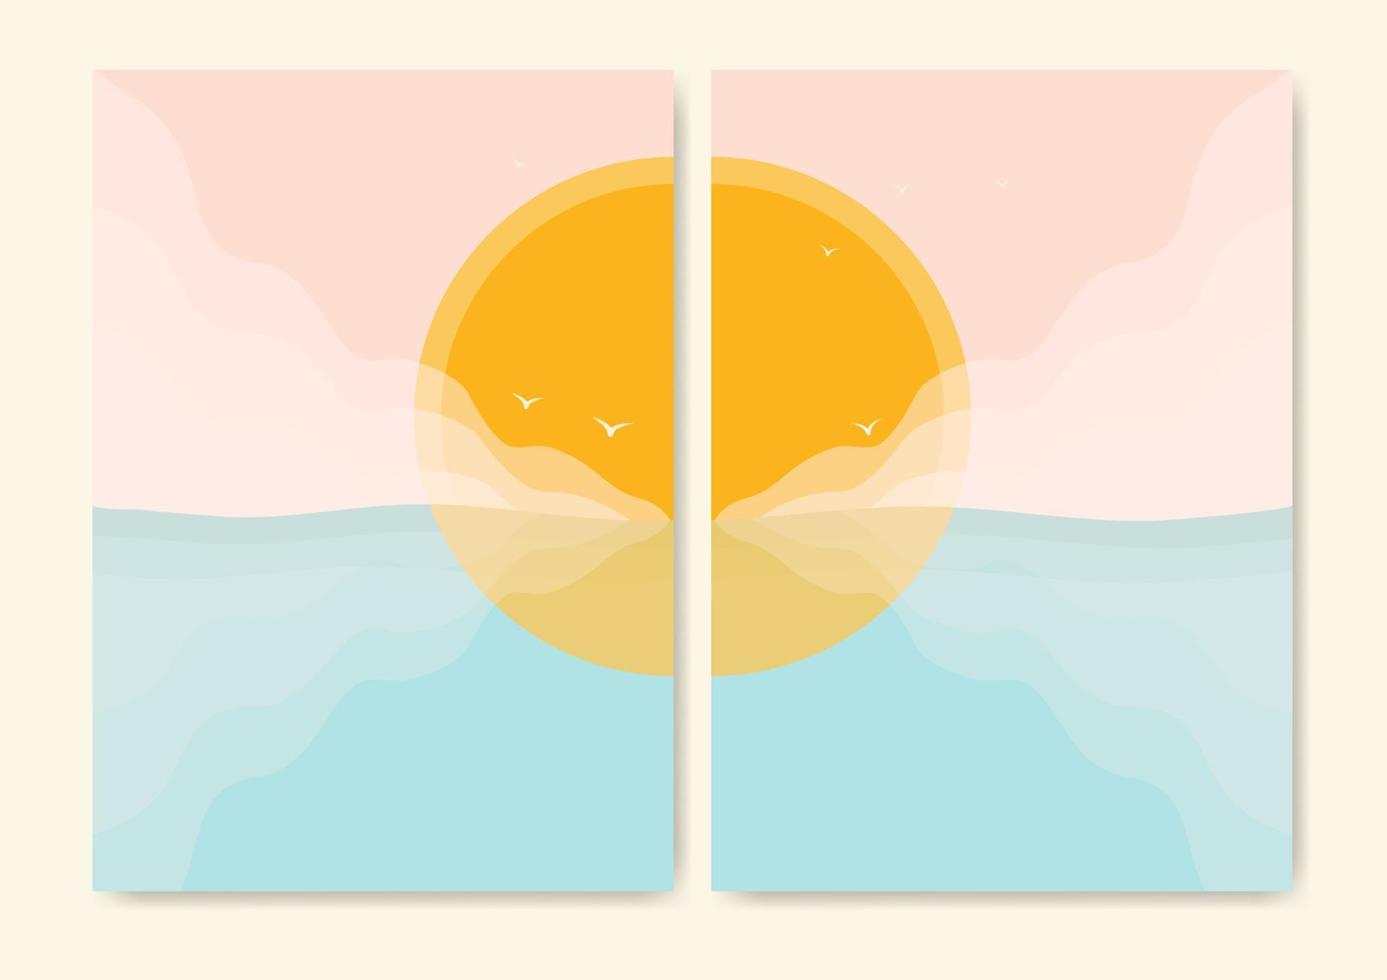 Minimalistic modern ocean side print. Ocean wave and sun aesthetic landscape. Skyline, wave vector illustration